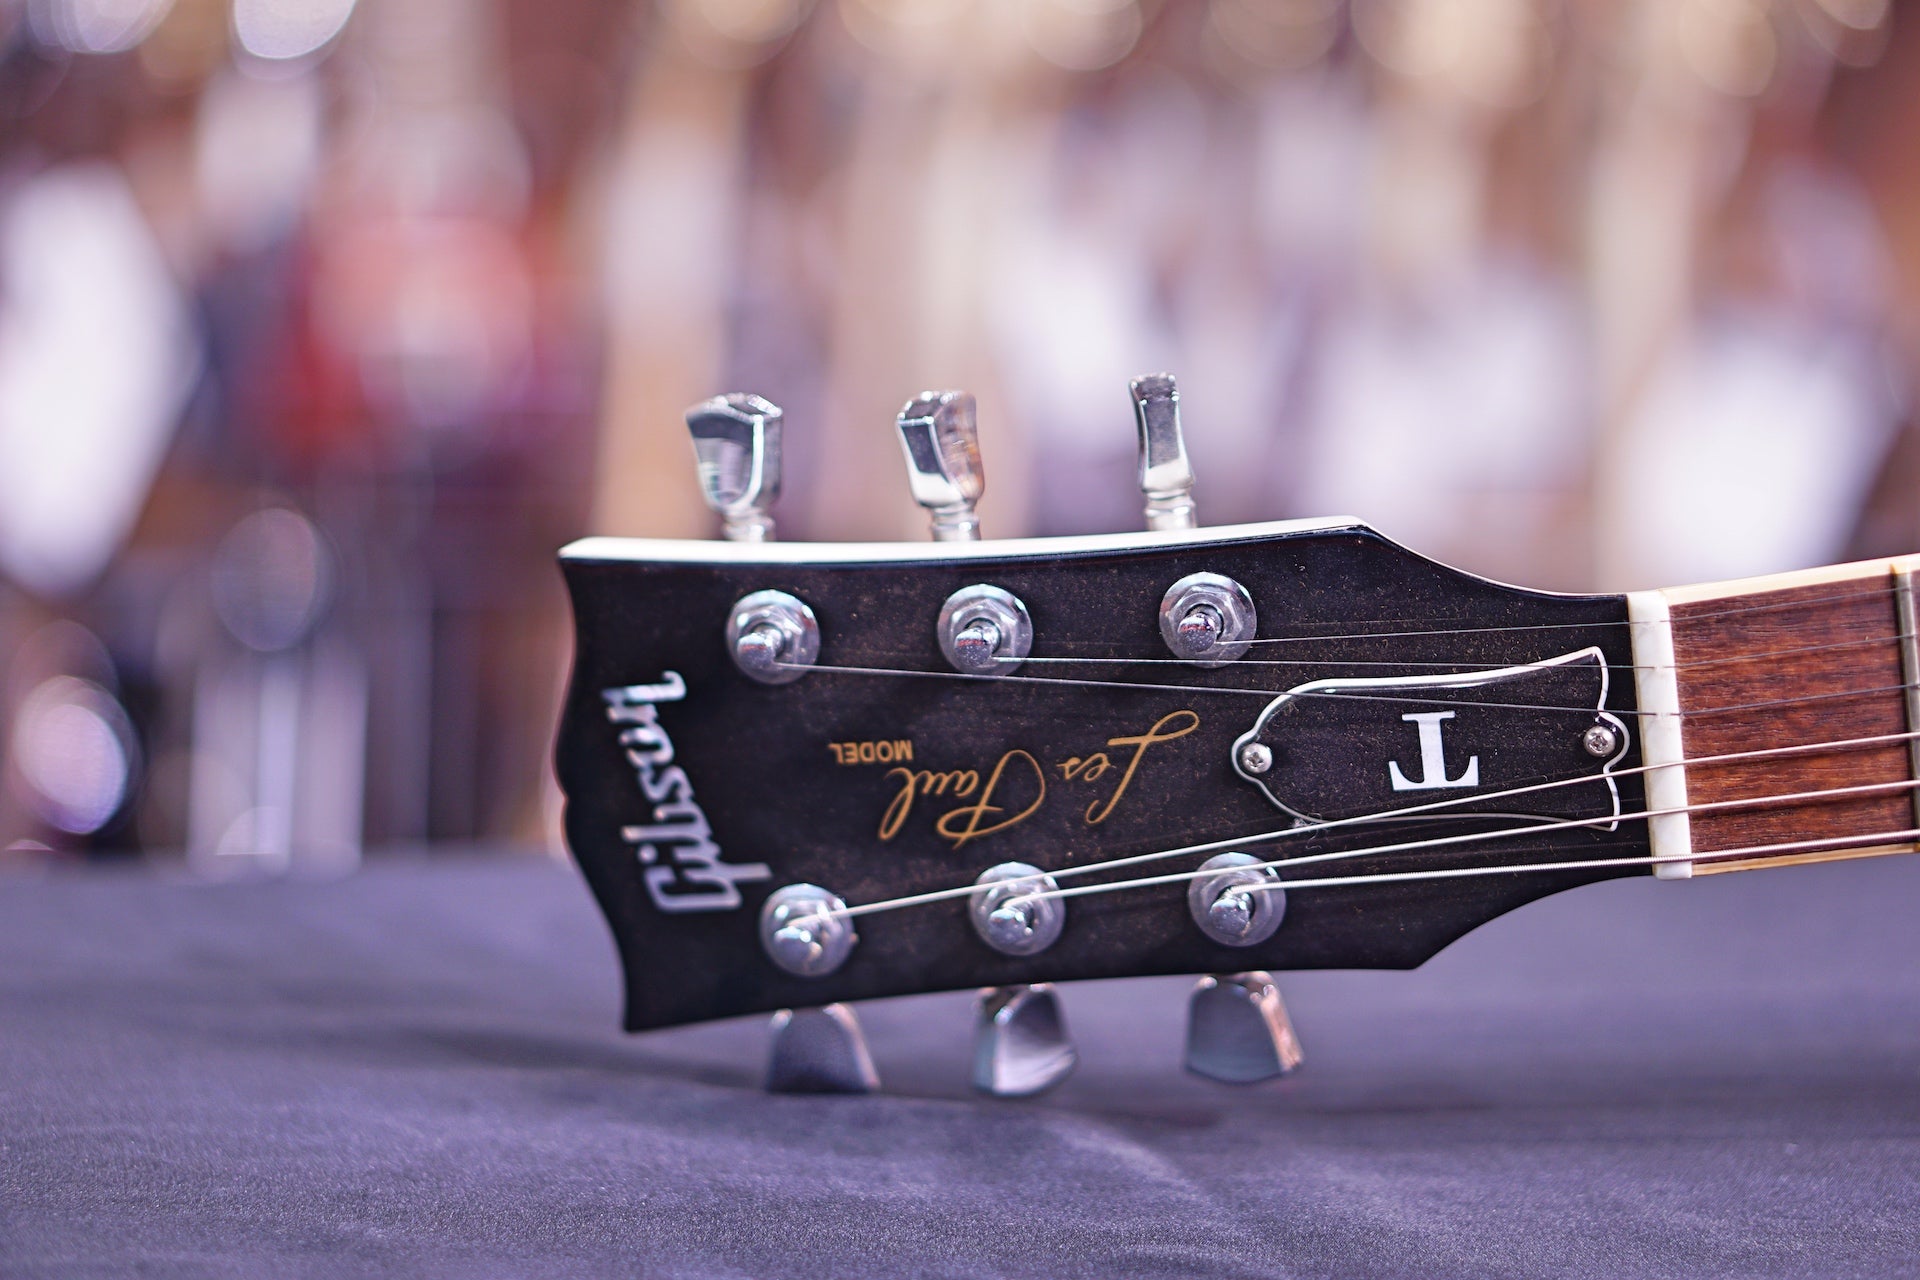 Gibson Tribute T alpine white - HIENDGUITAR   Gibson GUITAR